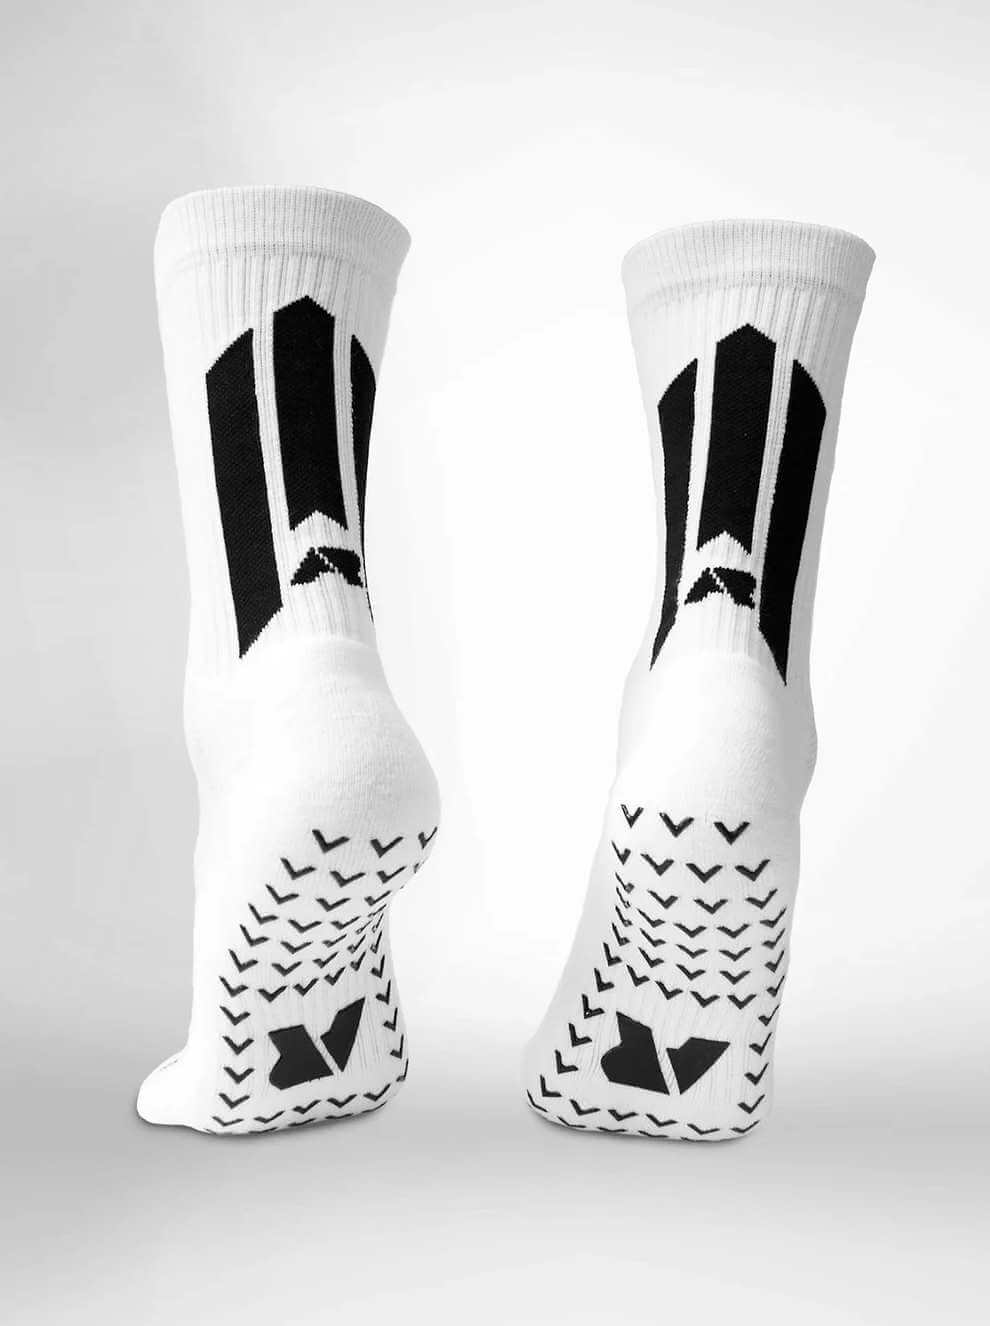 Performance Bundle Grip Socks, Grip Socks, Grip Socks Football, Grip  Socks Soccer, Soccer Socks